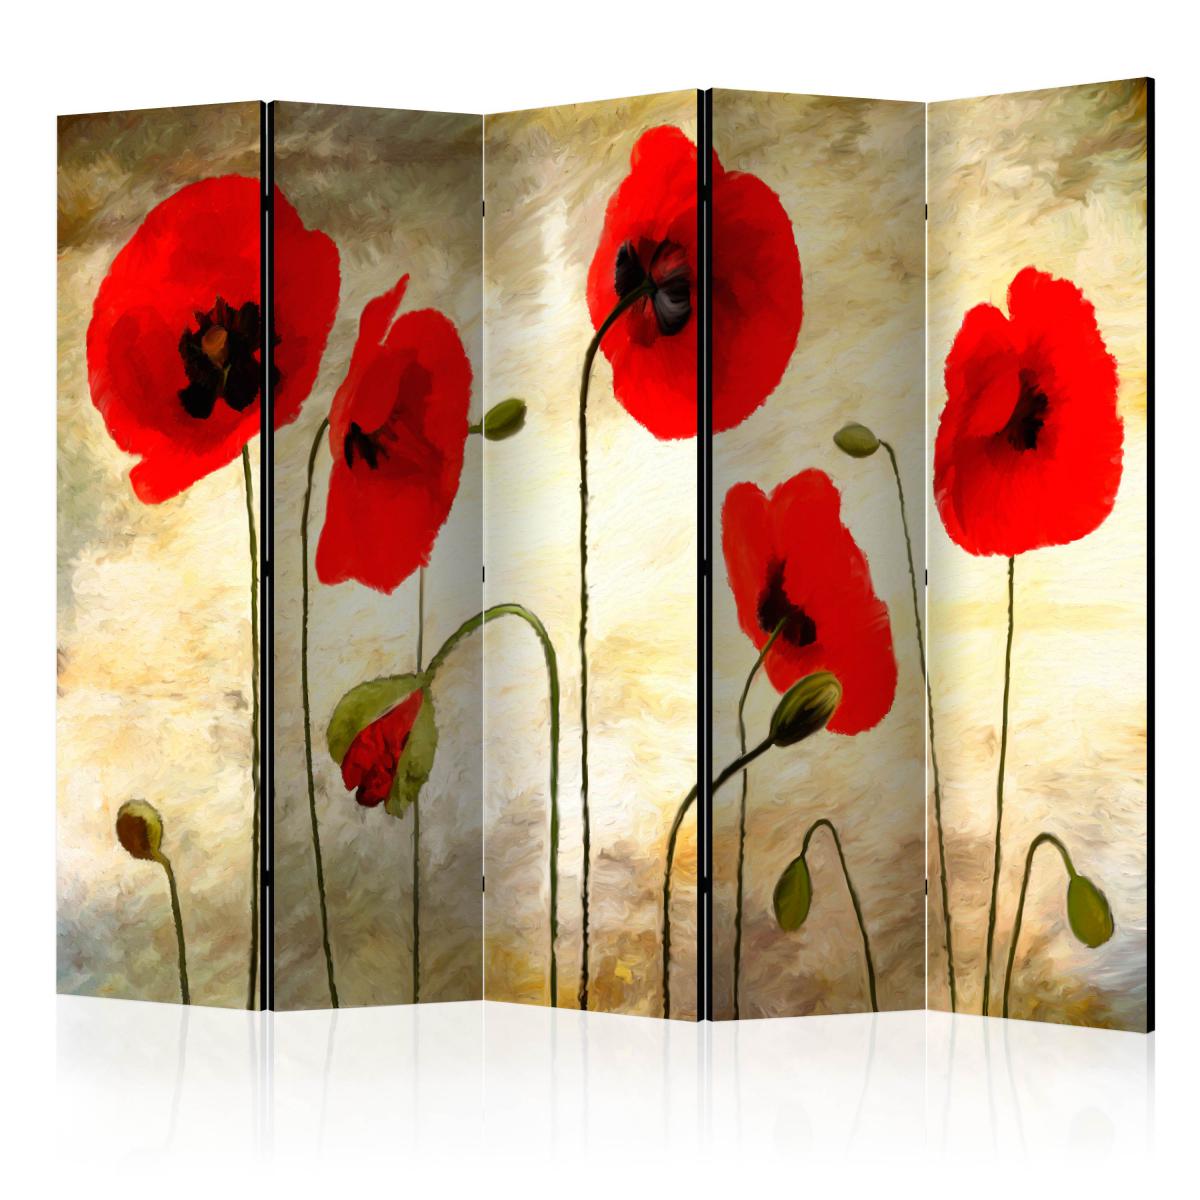 Bimago - Paravent 5 volets - Golden Field of Poppies II [Room Dividers] - Décoration, image, art | 225x172 cm | XL - Grand Format | - Cloisons